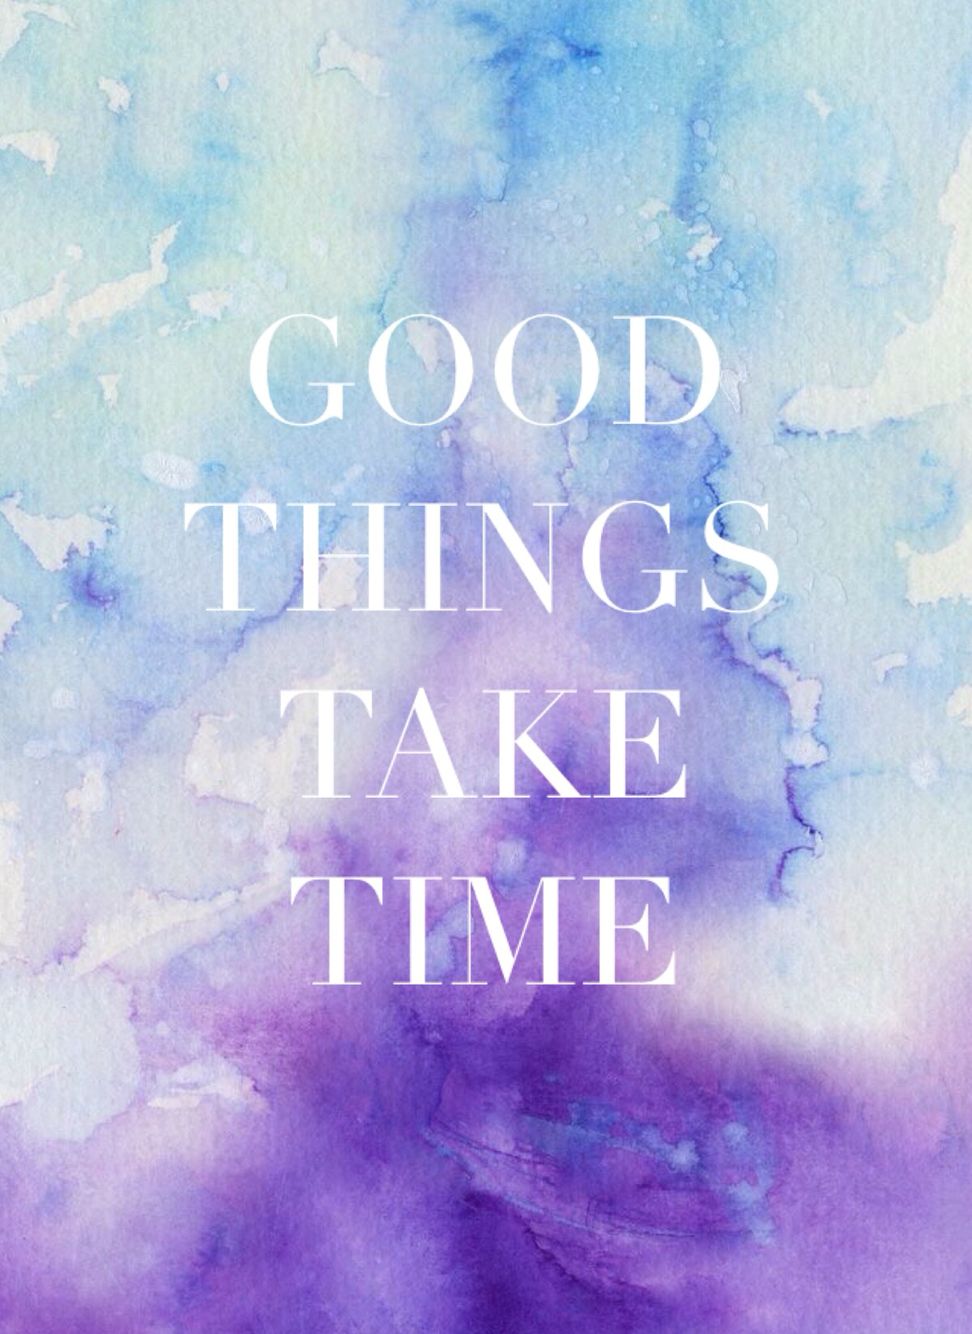 Take Your Time Quotes : Take Your Time Quotes &Amp; Sayings | Take Your